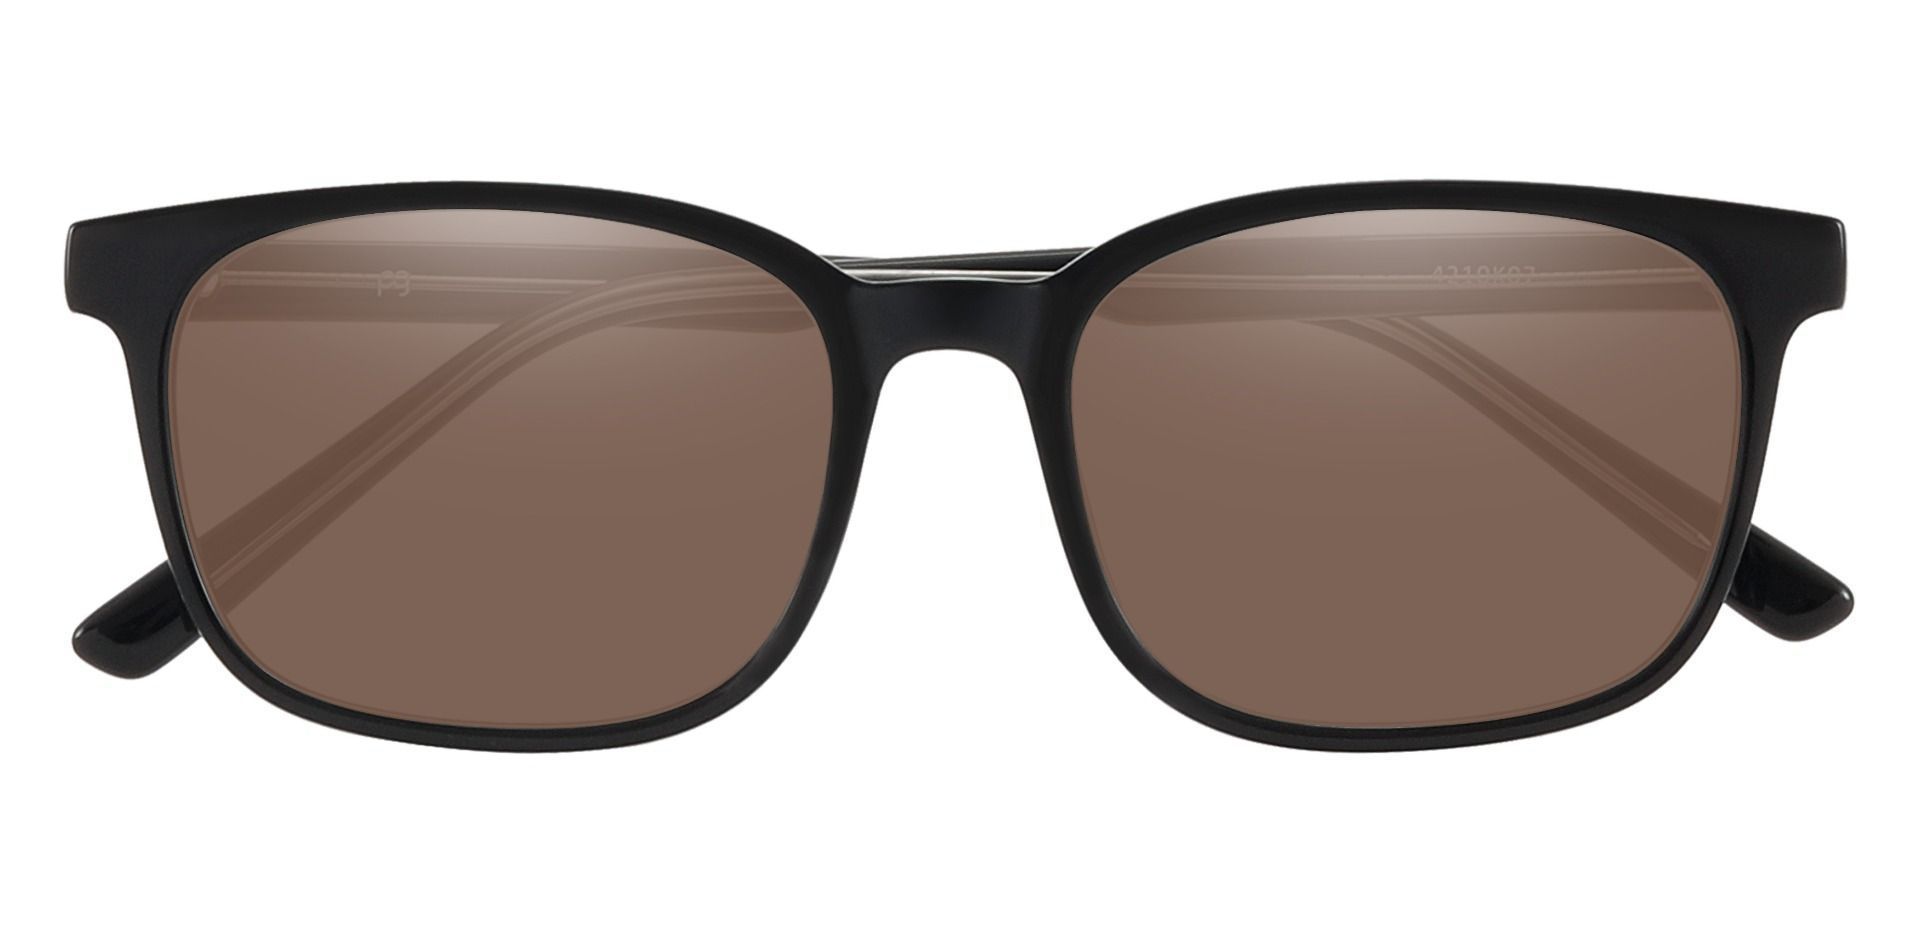 Windsor Rectangle Progressive Sunglasses - Black Frame With Brown Lenses